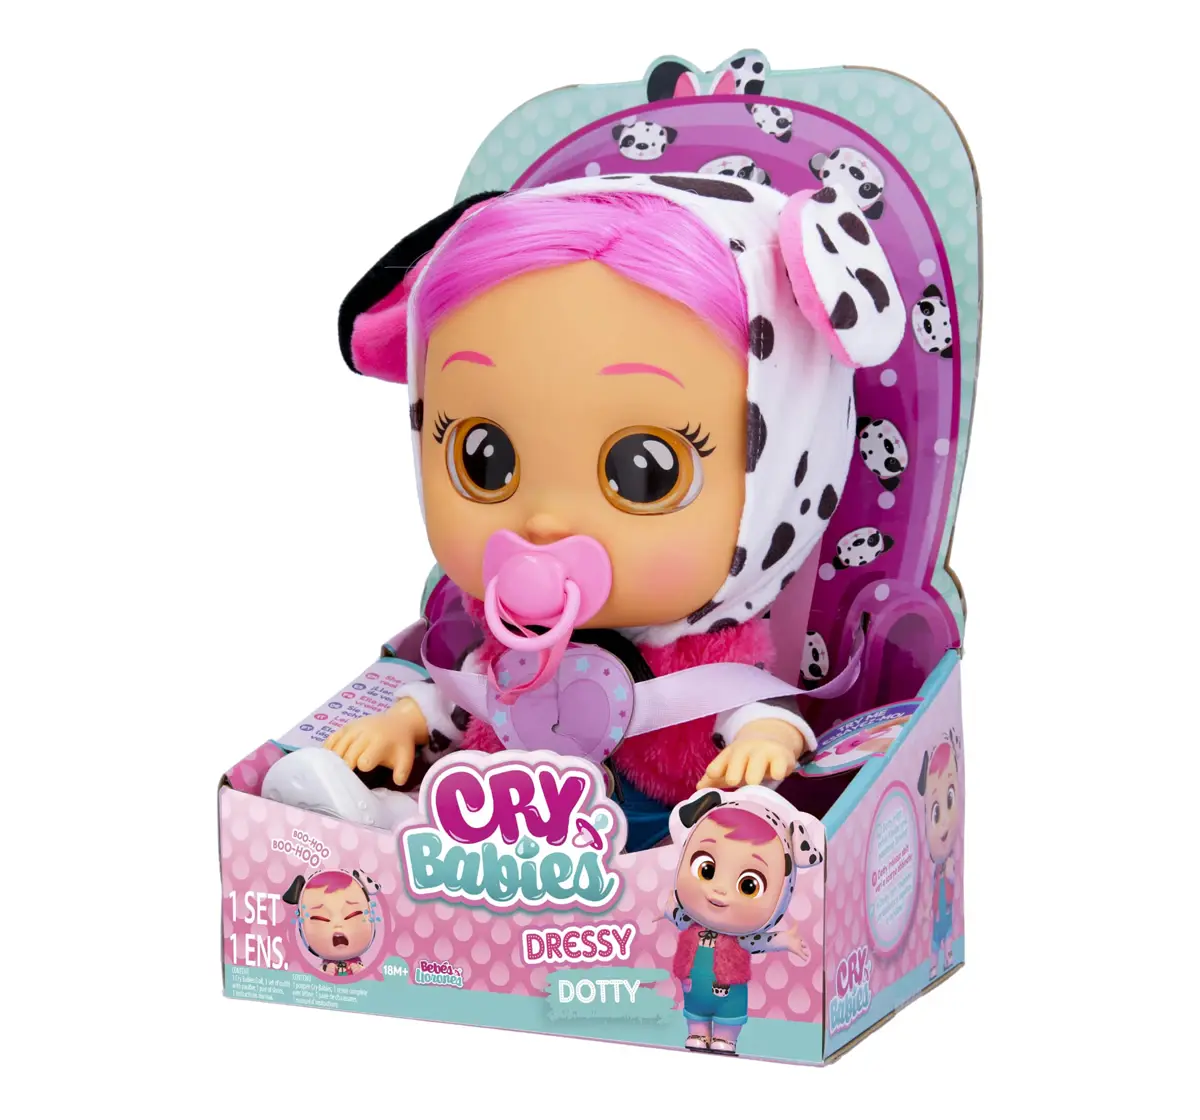 Cry Babies Dressy Dotty Dolls For Kids, 18M+